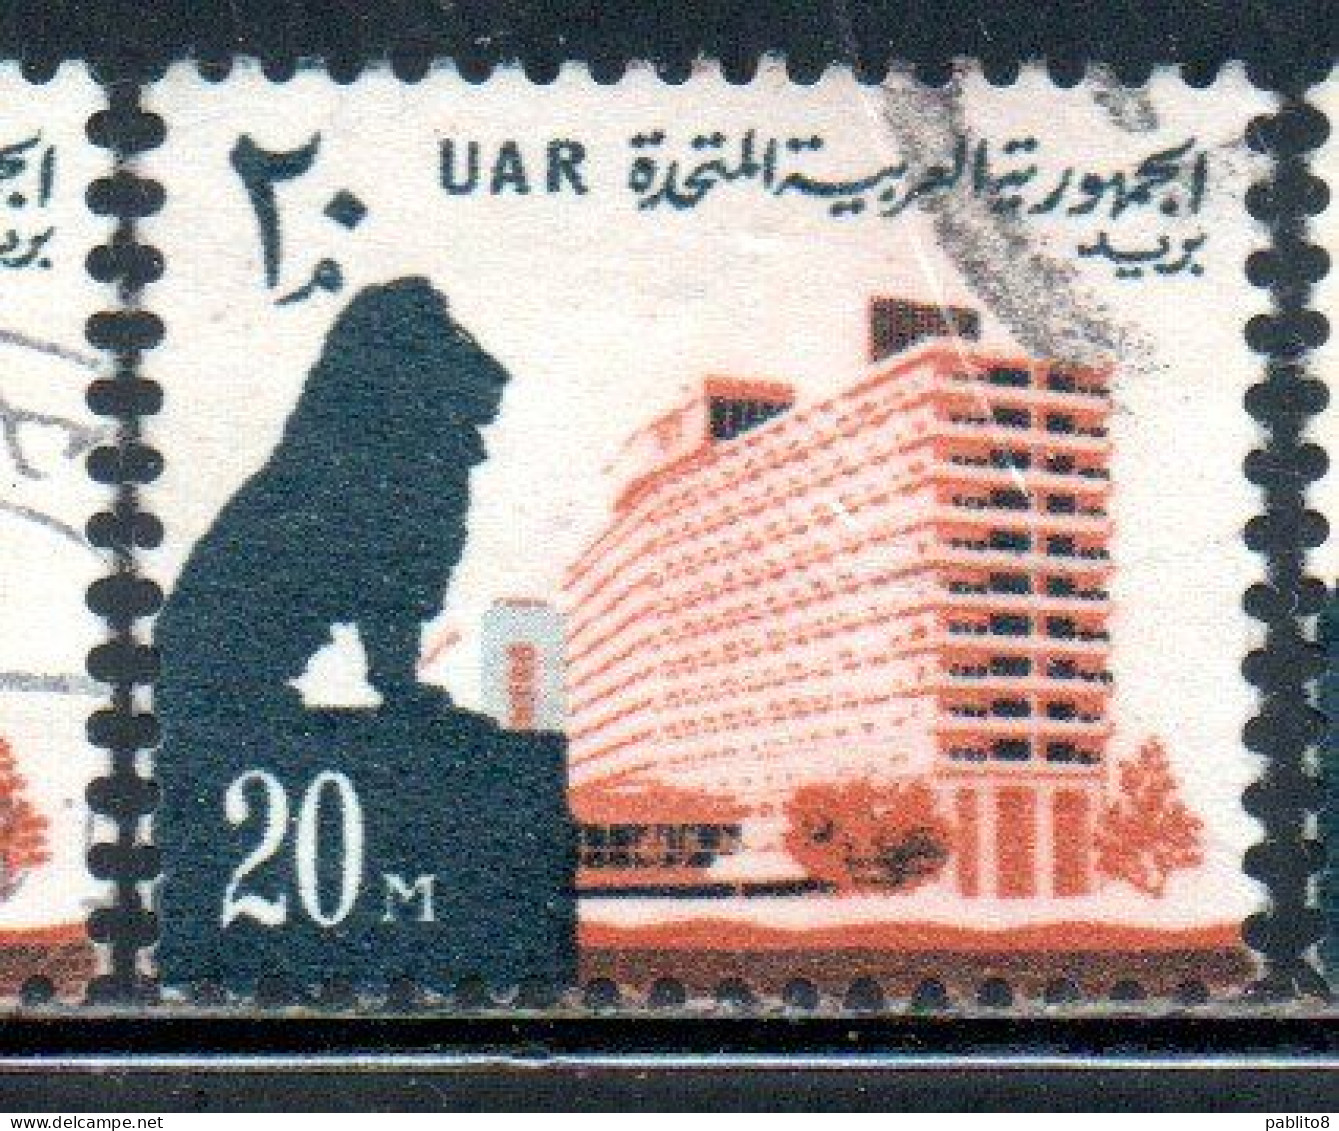 UAR EGYPT EGITTO 1964 1967 LION AND NILE HILTON HOTEL 20m USED USATO OBLITERE' - Usati